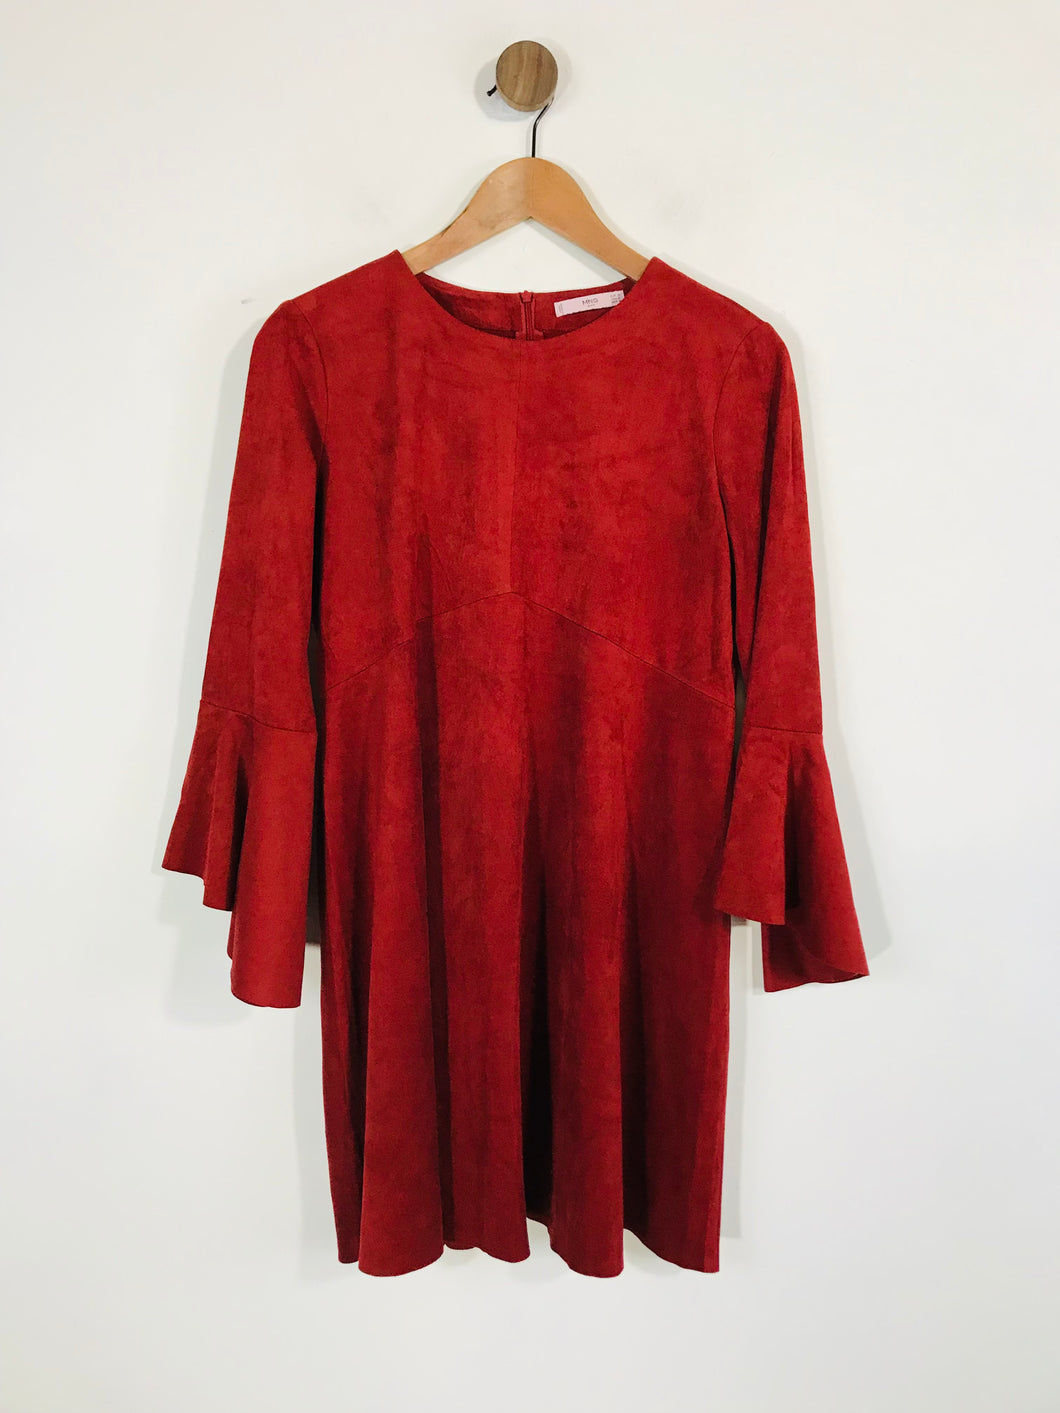 Mango Women's Long Sleeve Faux Suede A-Line Dress | M UK10-12 | Red